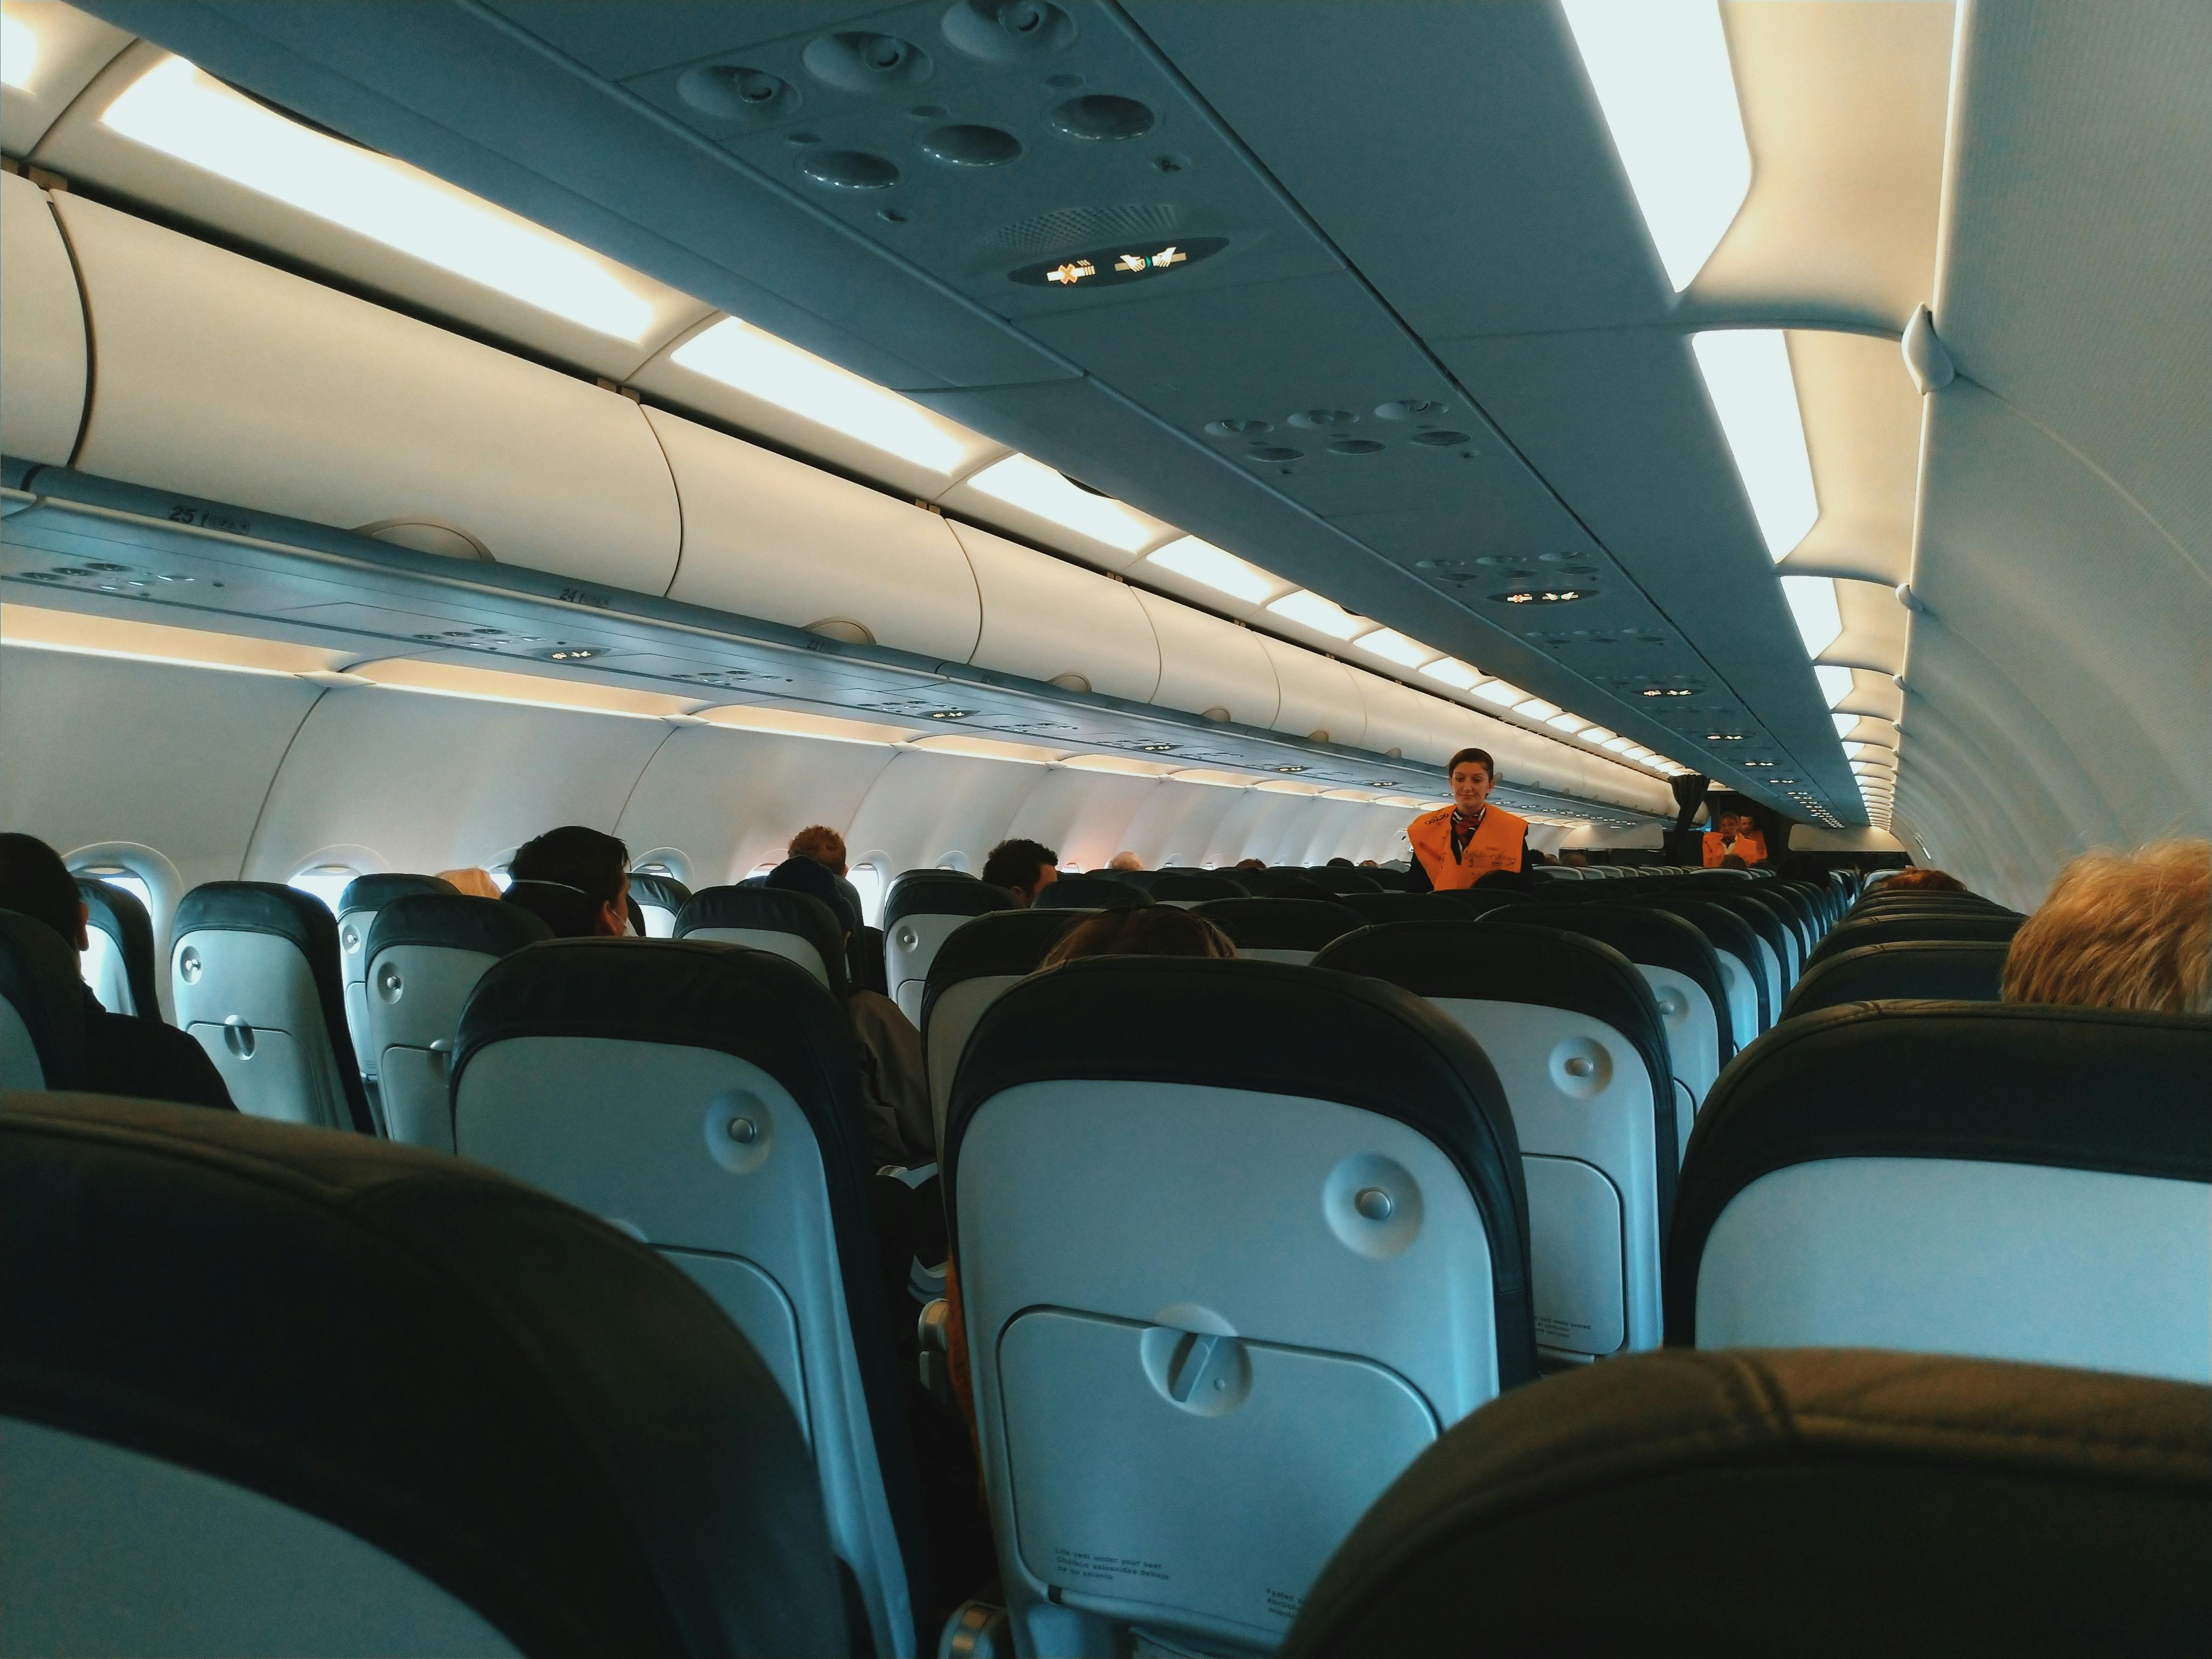 A stewardess walking on a plane | Source: Pexels